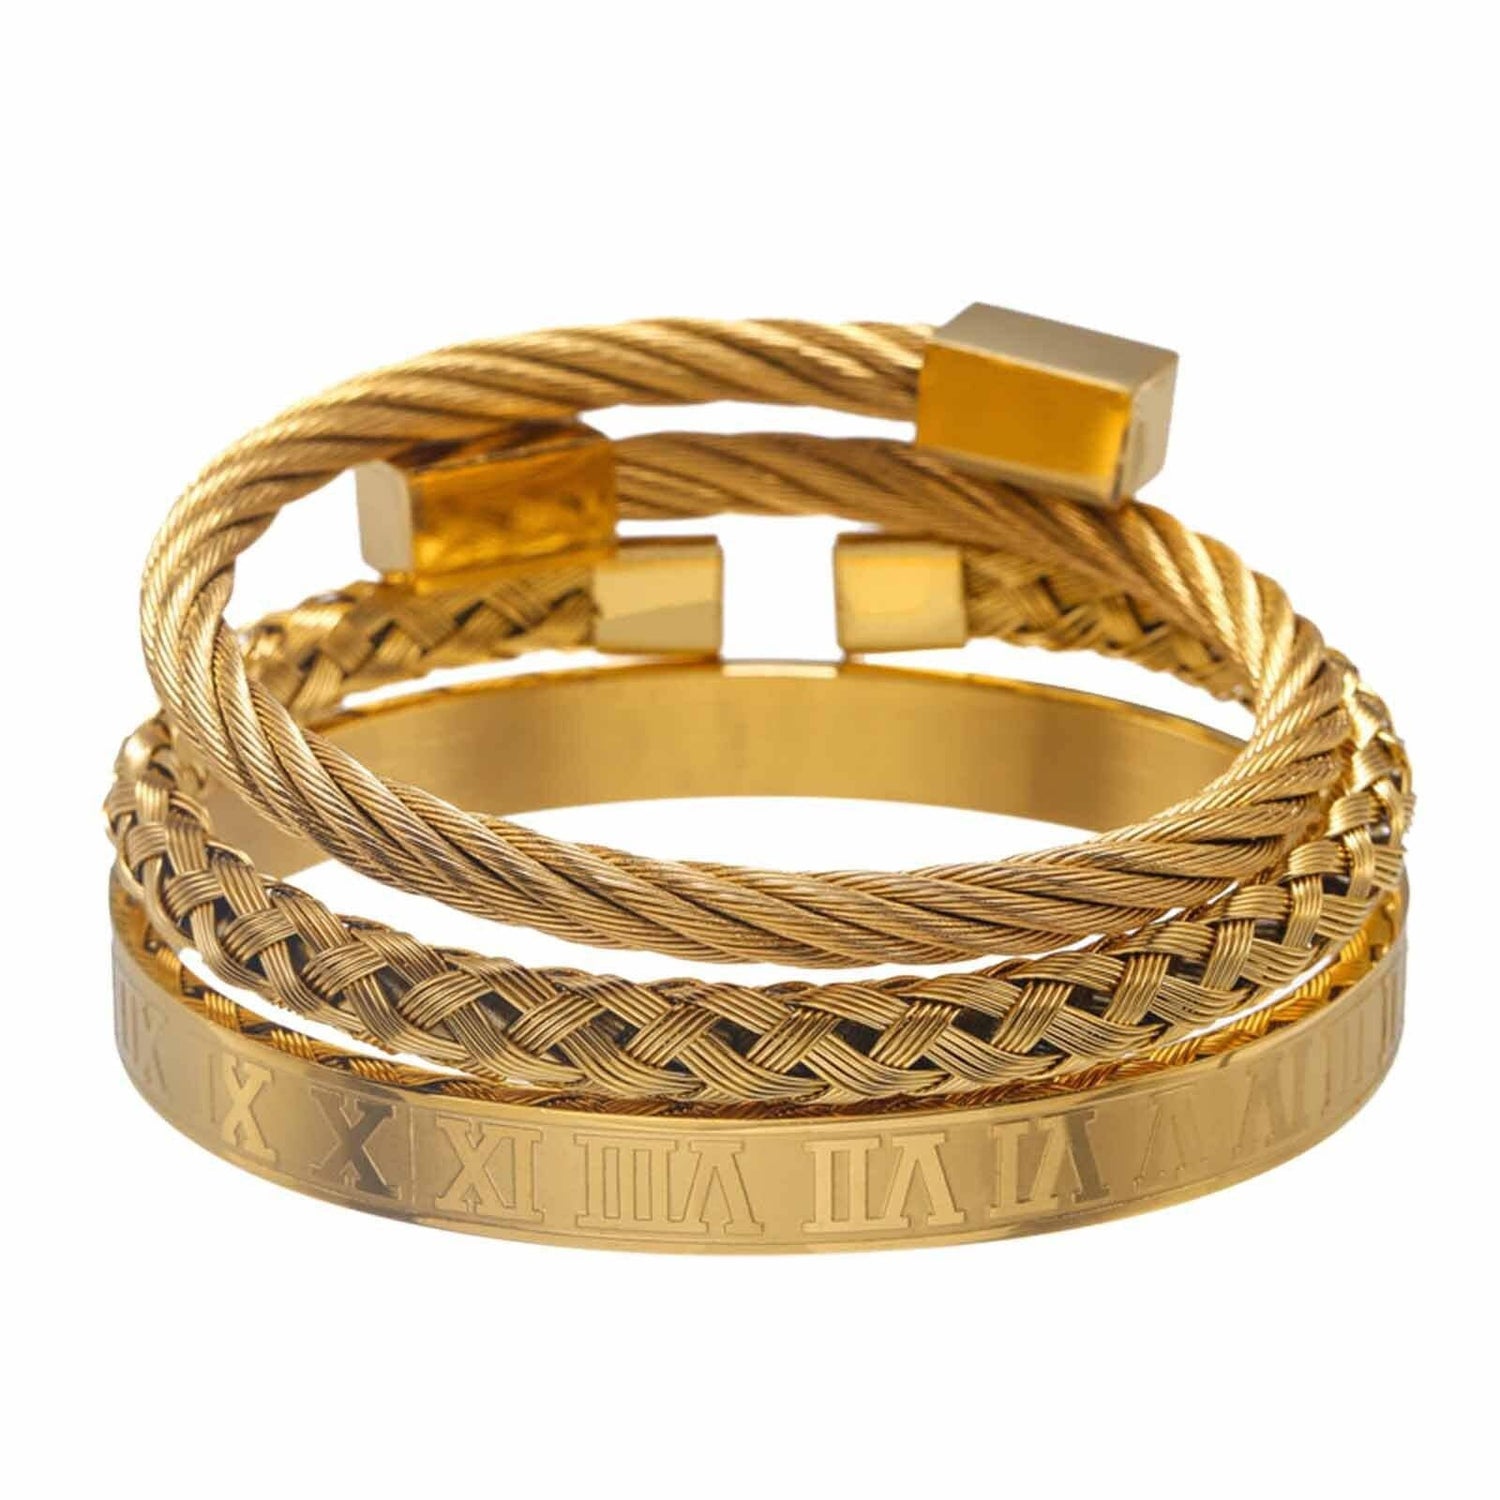 Atalianos Roman Numeral Bracelet – The Jewel Parlor